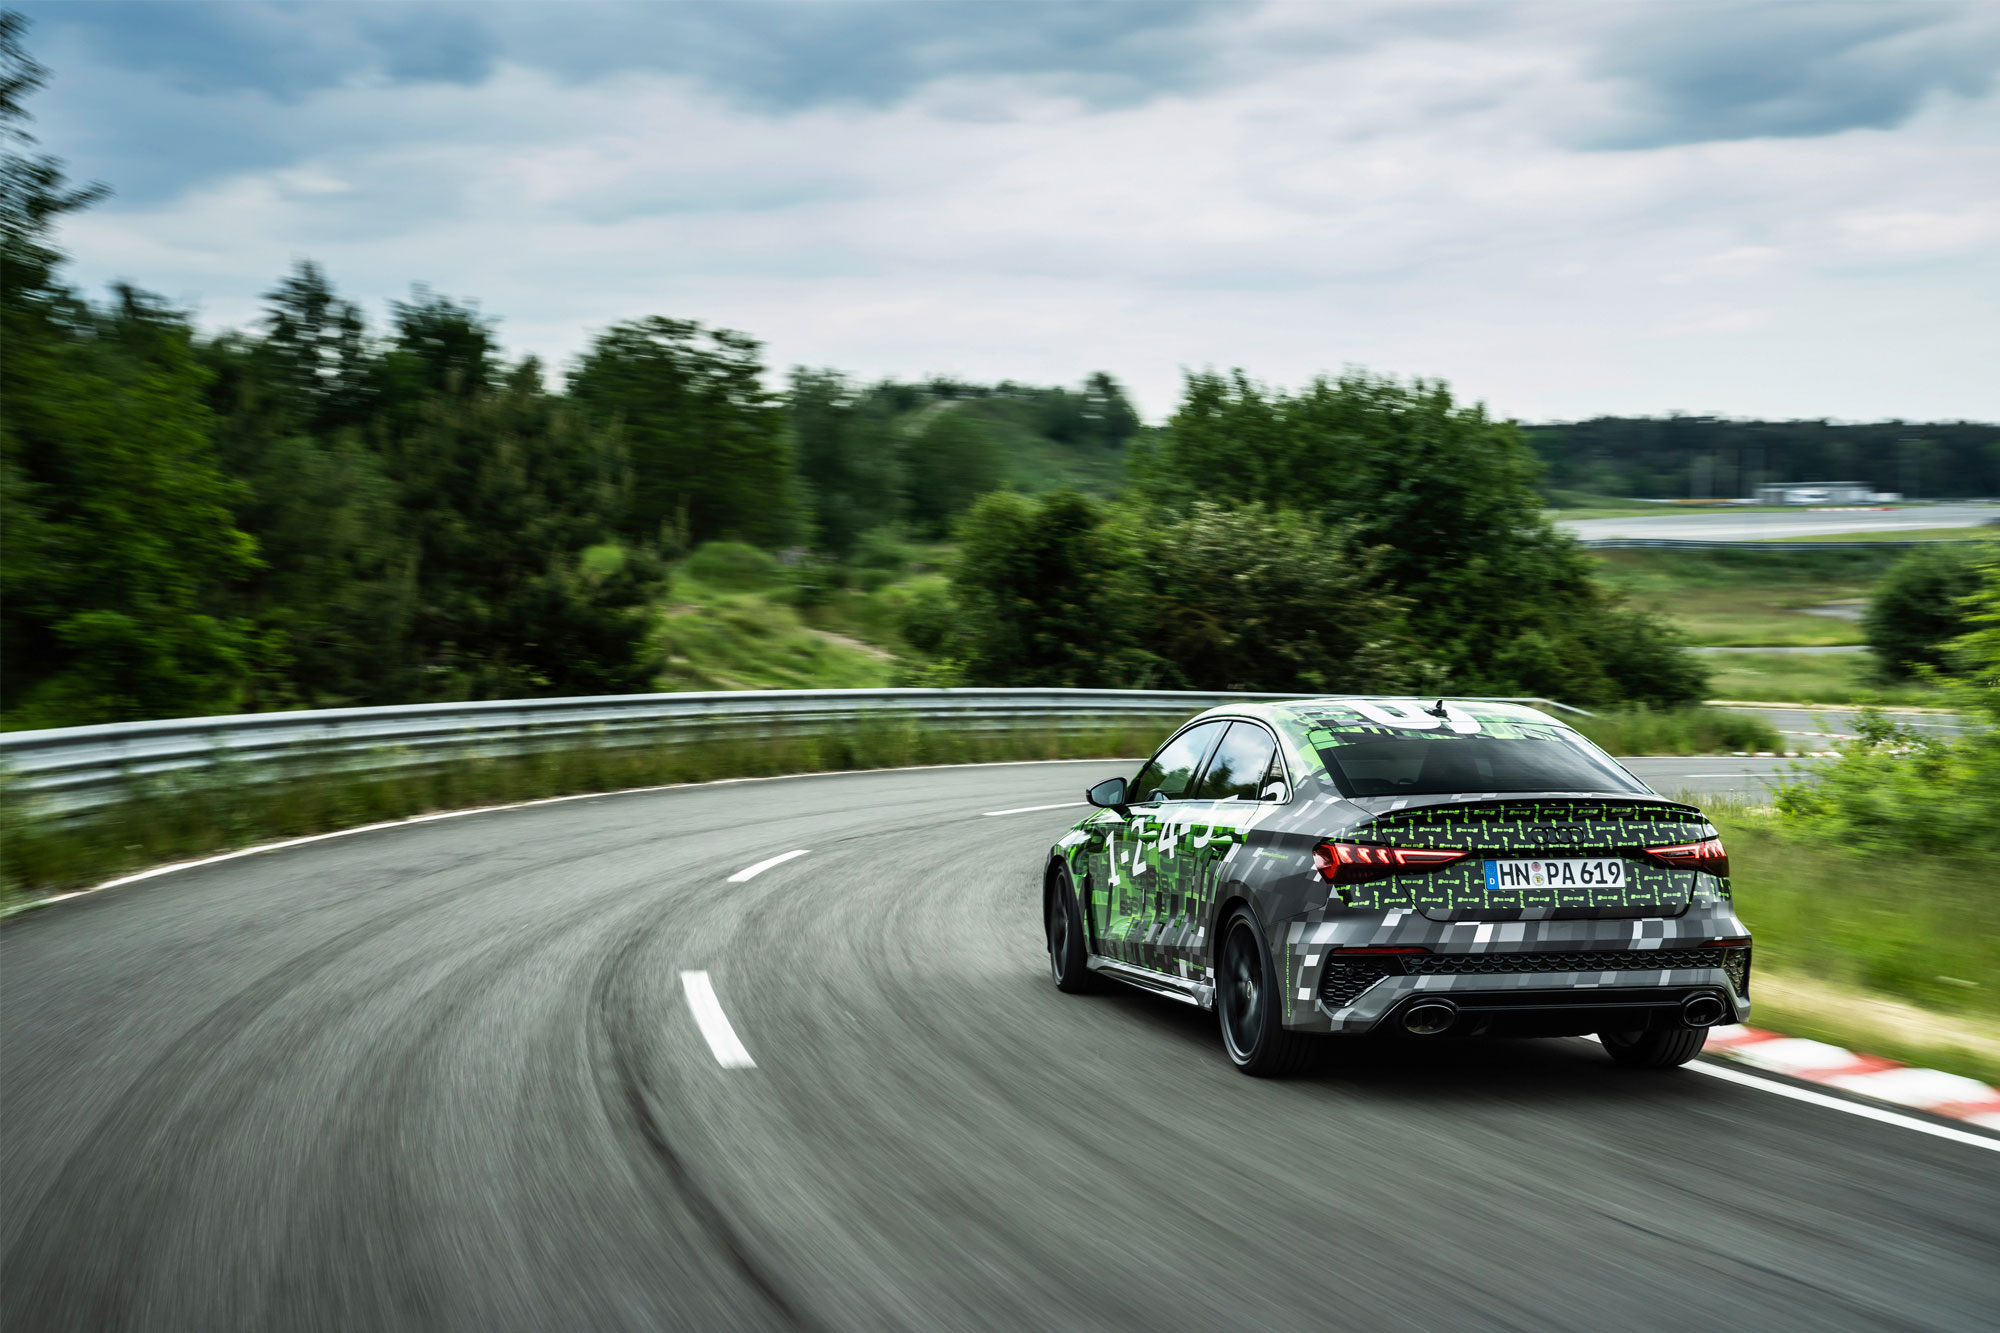 Drift-Mode, 0-100km/h σε 3,8sec και τελική 290km/h. Αυτό είναι το νέο Audi RS3!